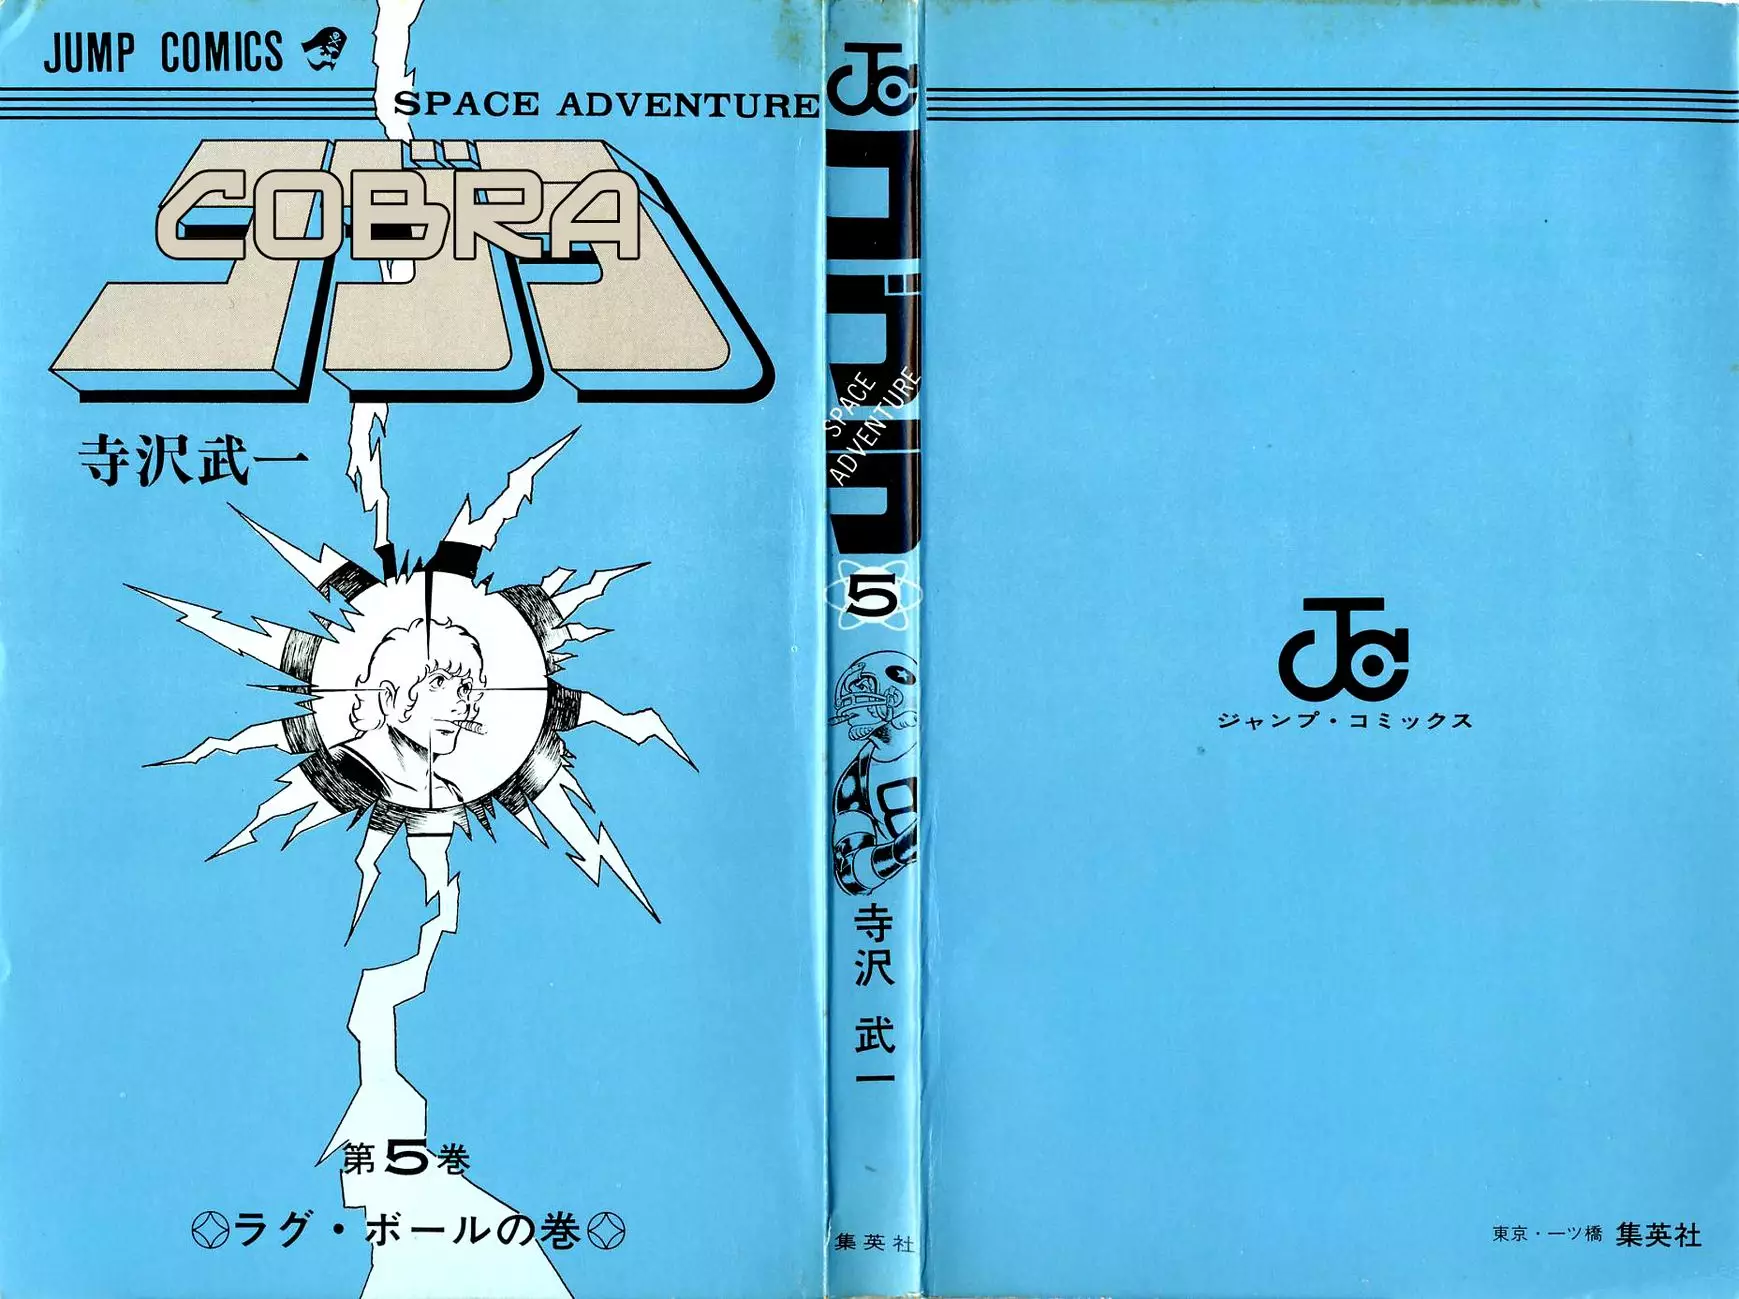 Space Adventure Cobra - 8 page 1-993db212